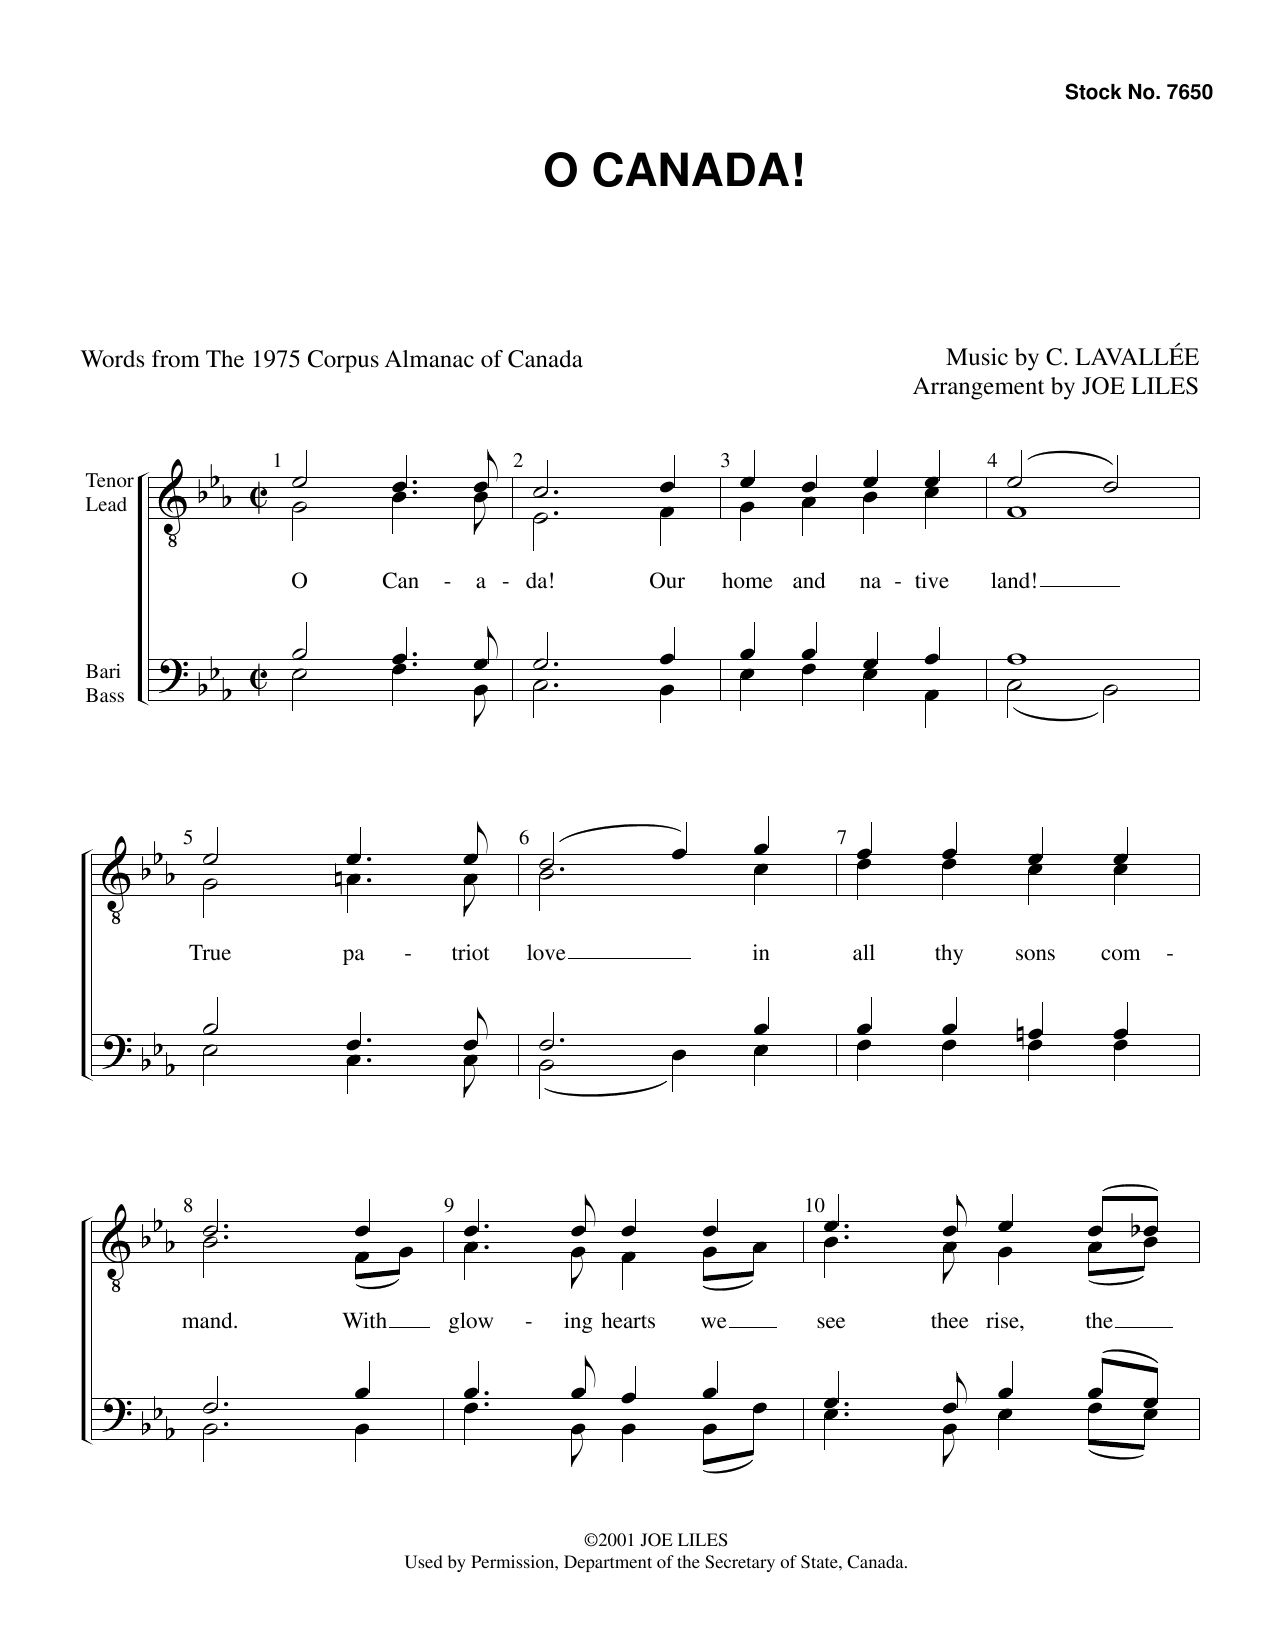 Calixa Lavallee O Canada! (arr. Joe Liles) Sheet Music Notes & Chords for TTBB Choir - Download or Print PDF